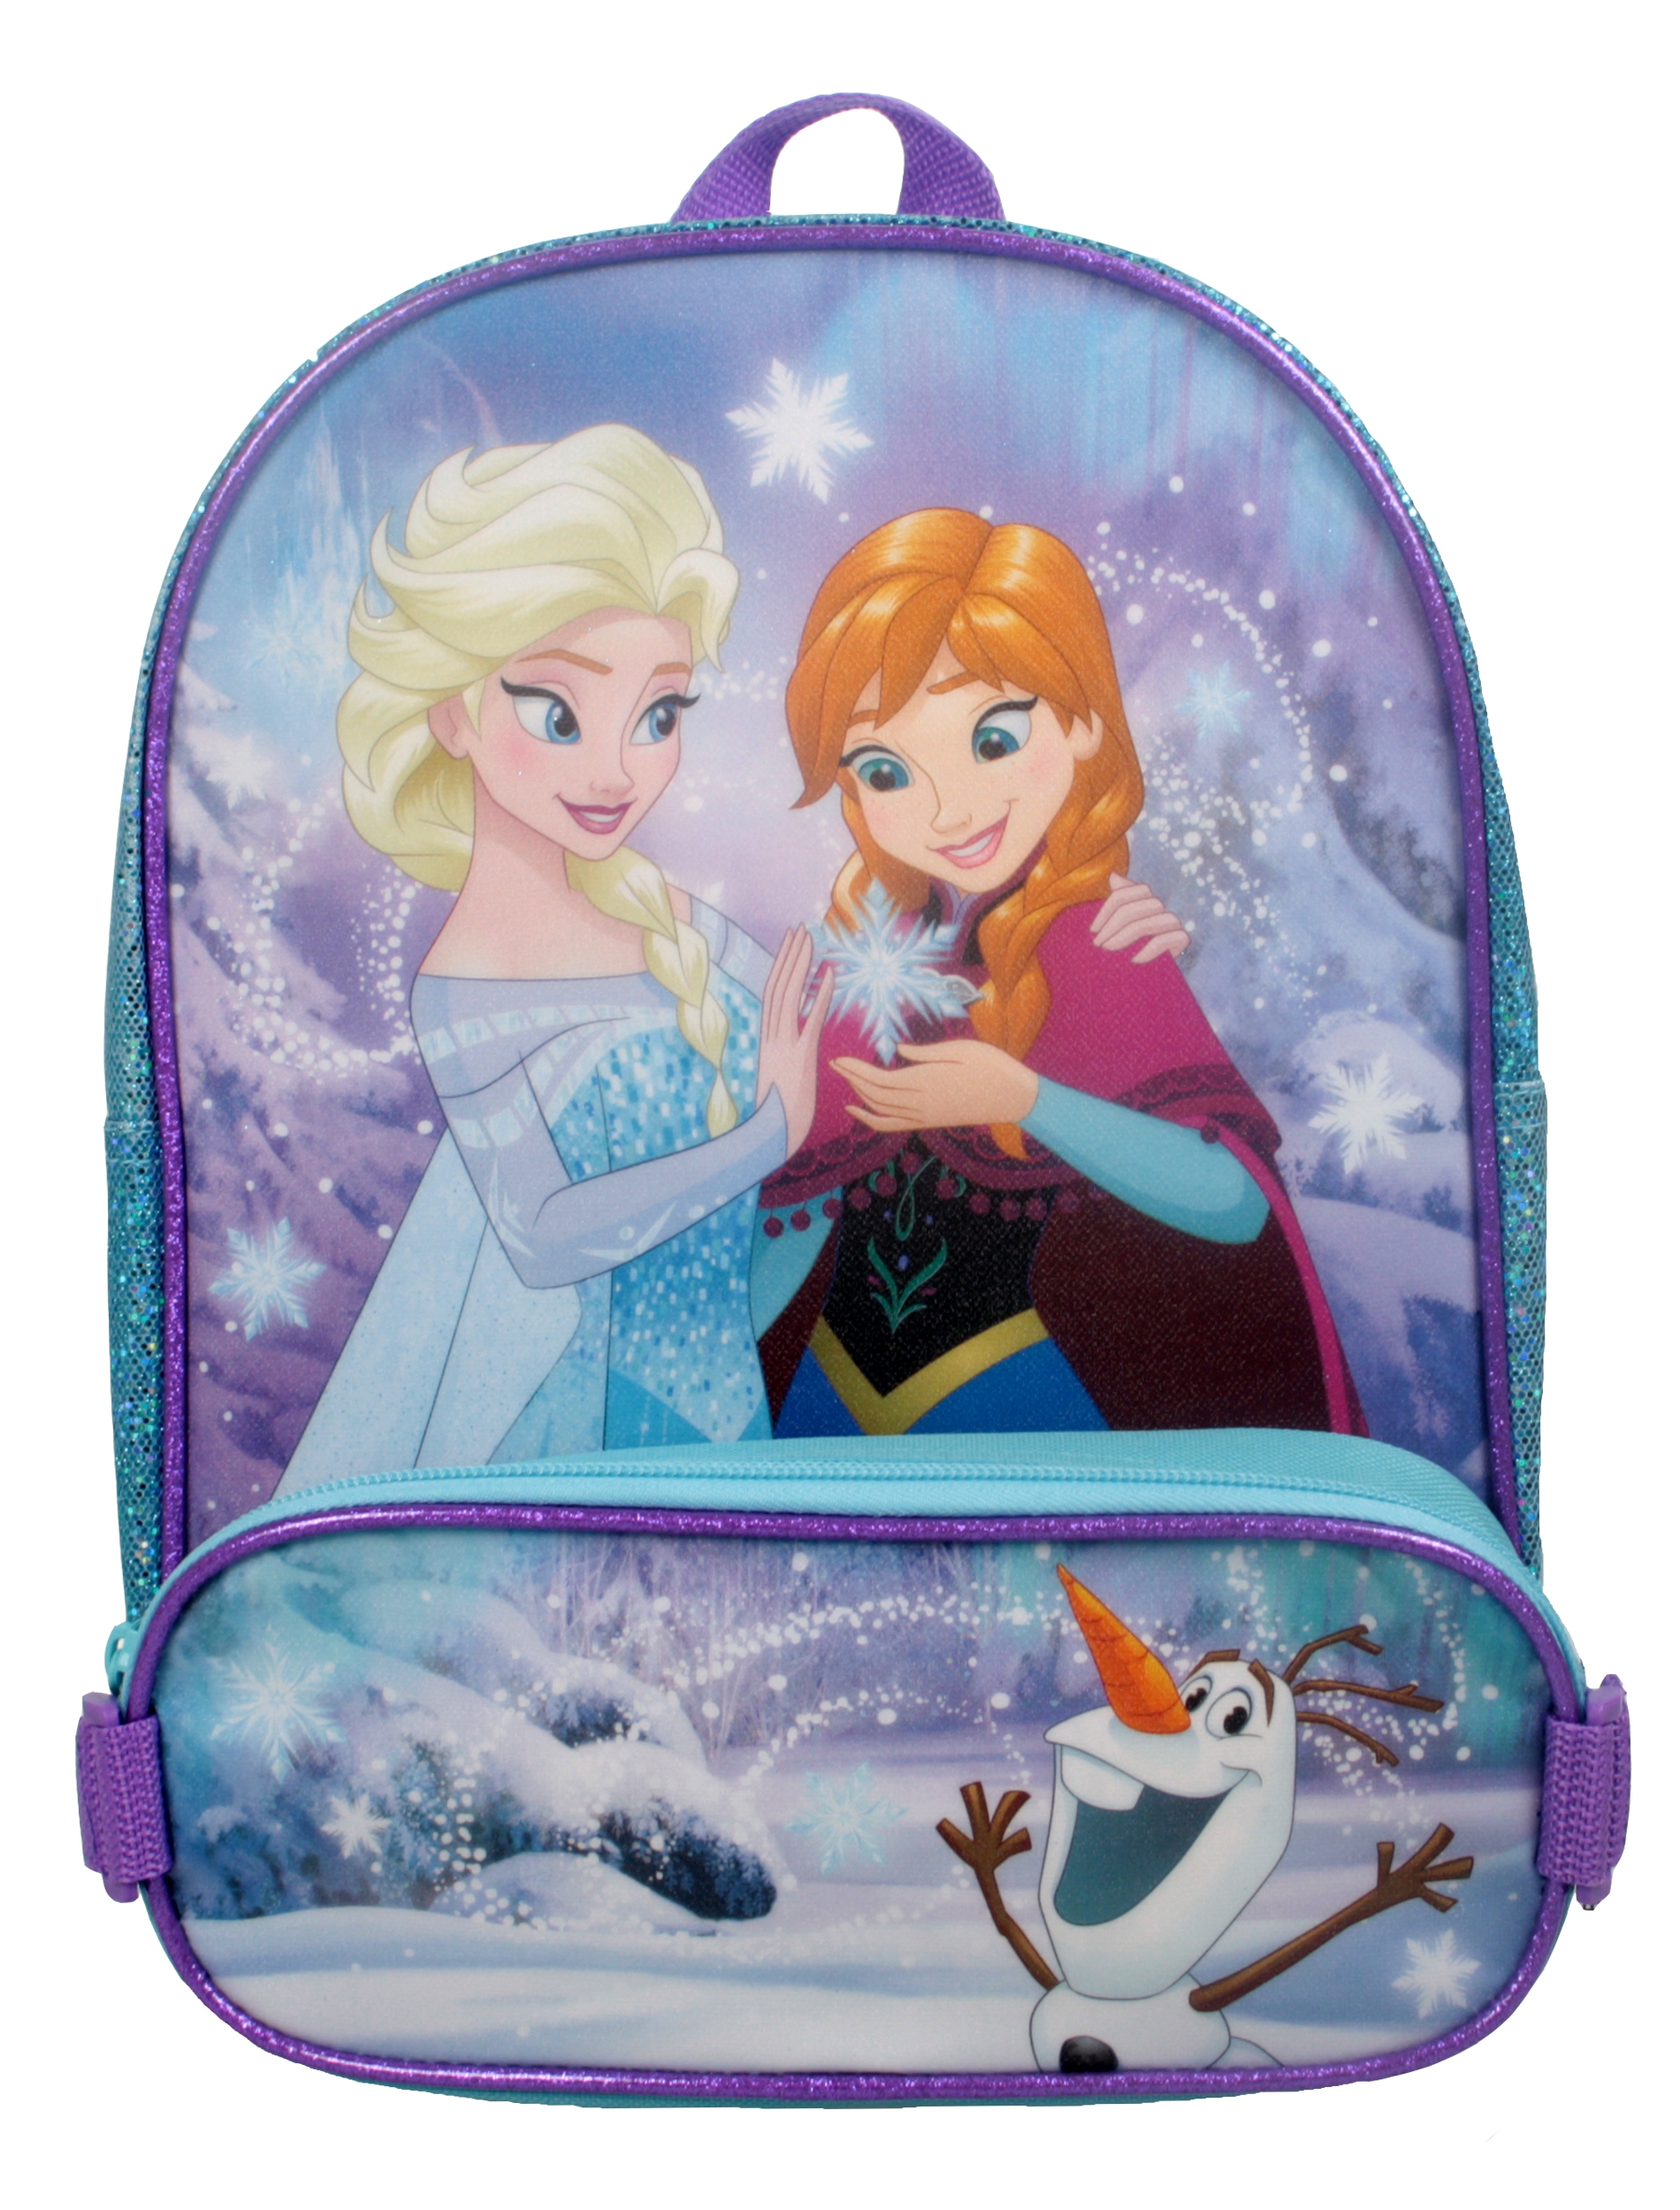 Frozen Anna Elsa with Olaf Pencil Case School Bag Rucksack Backpack